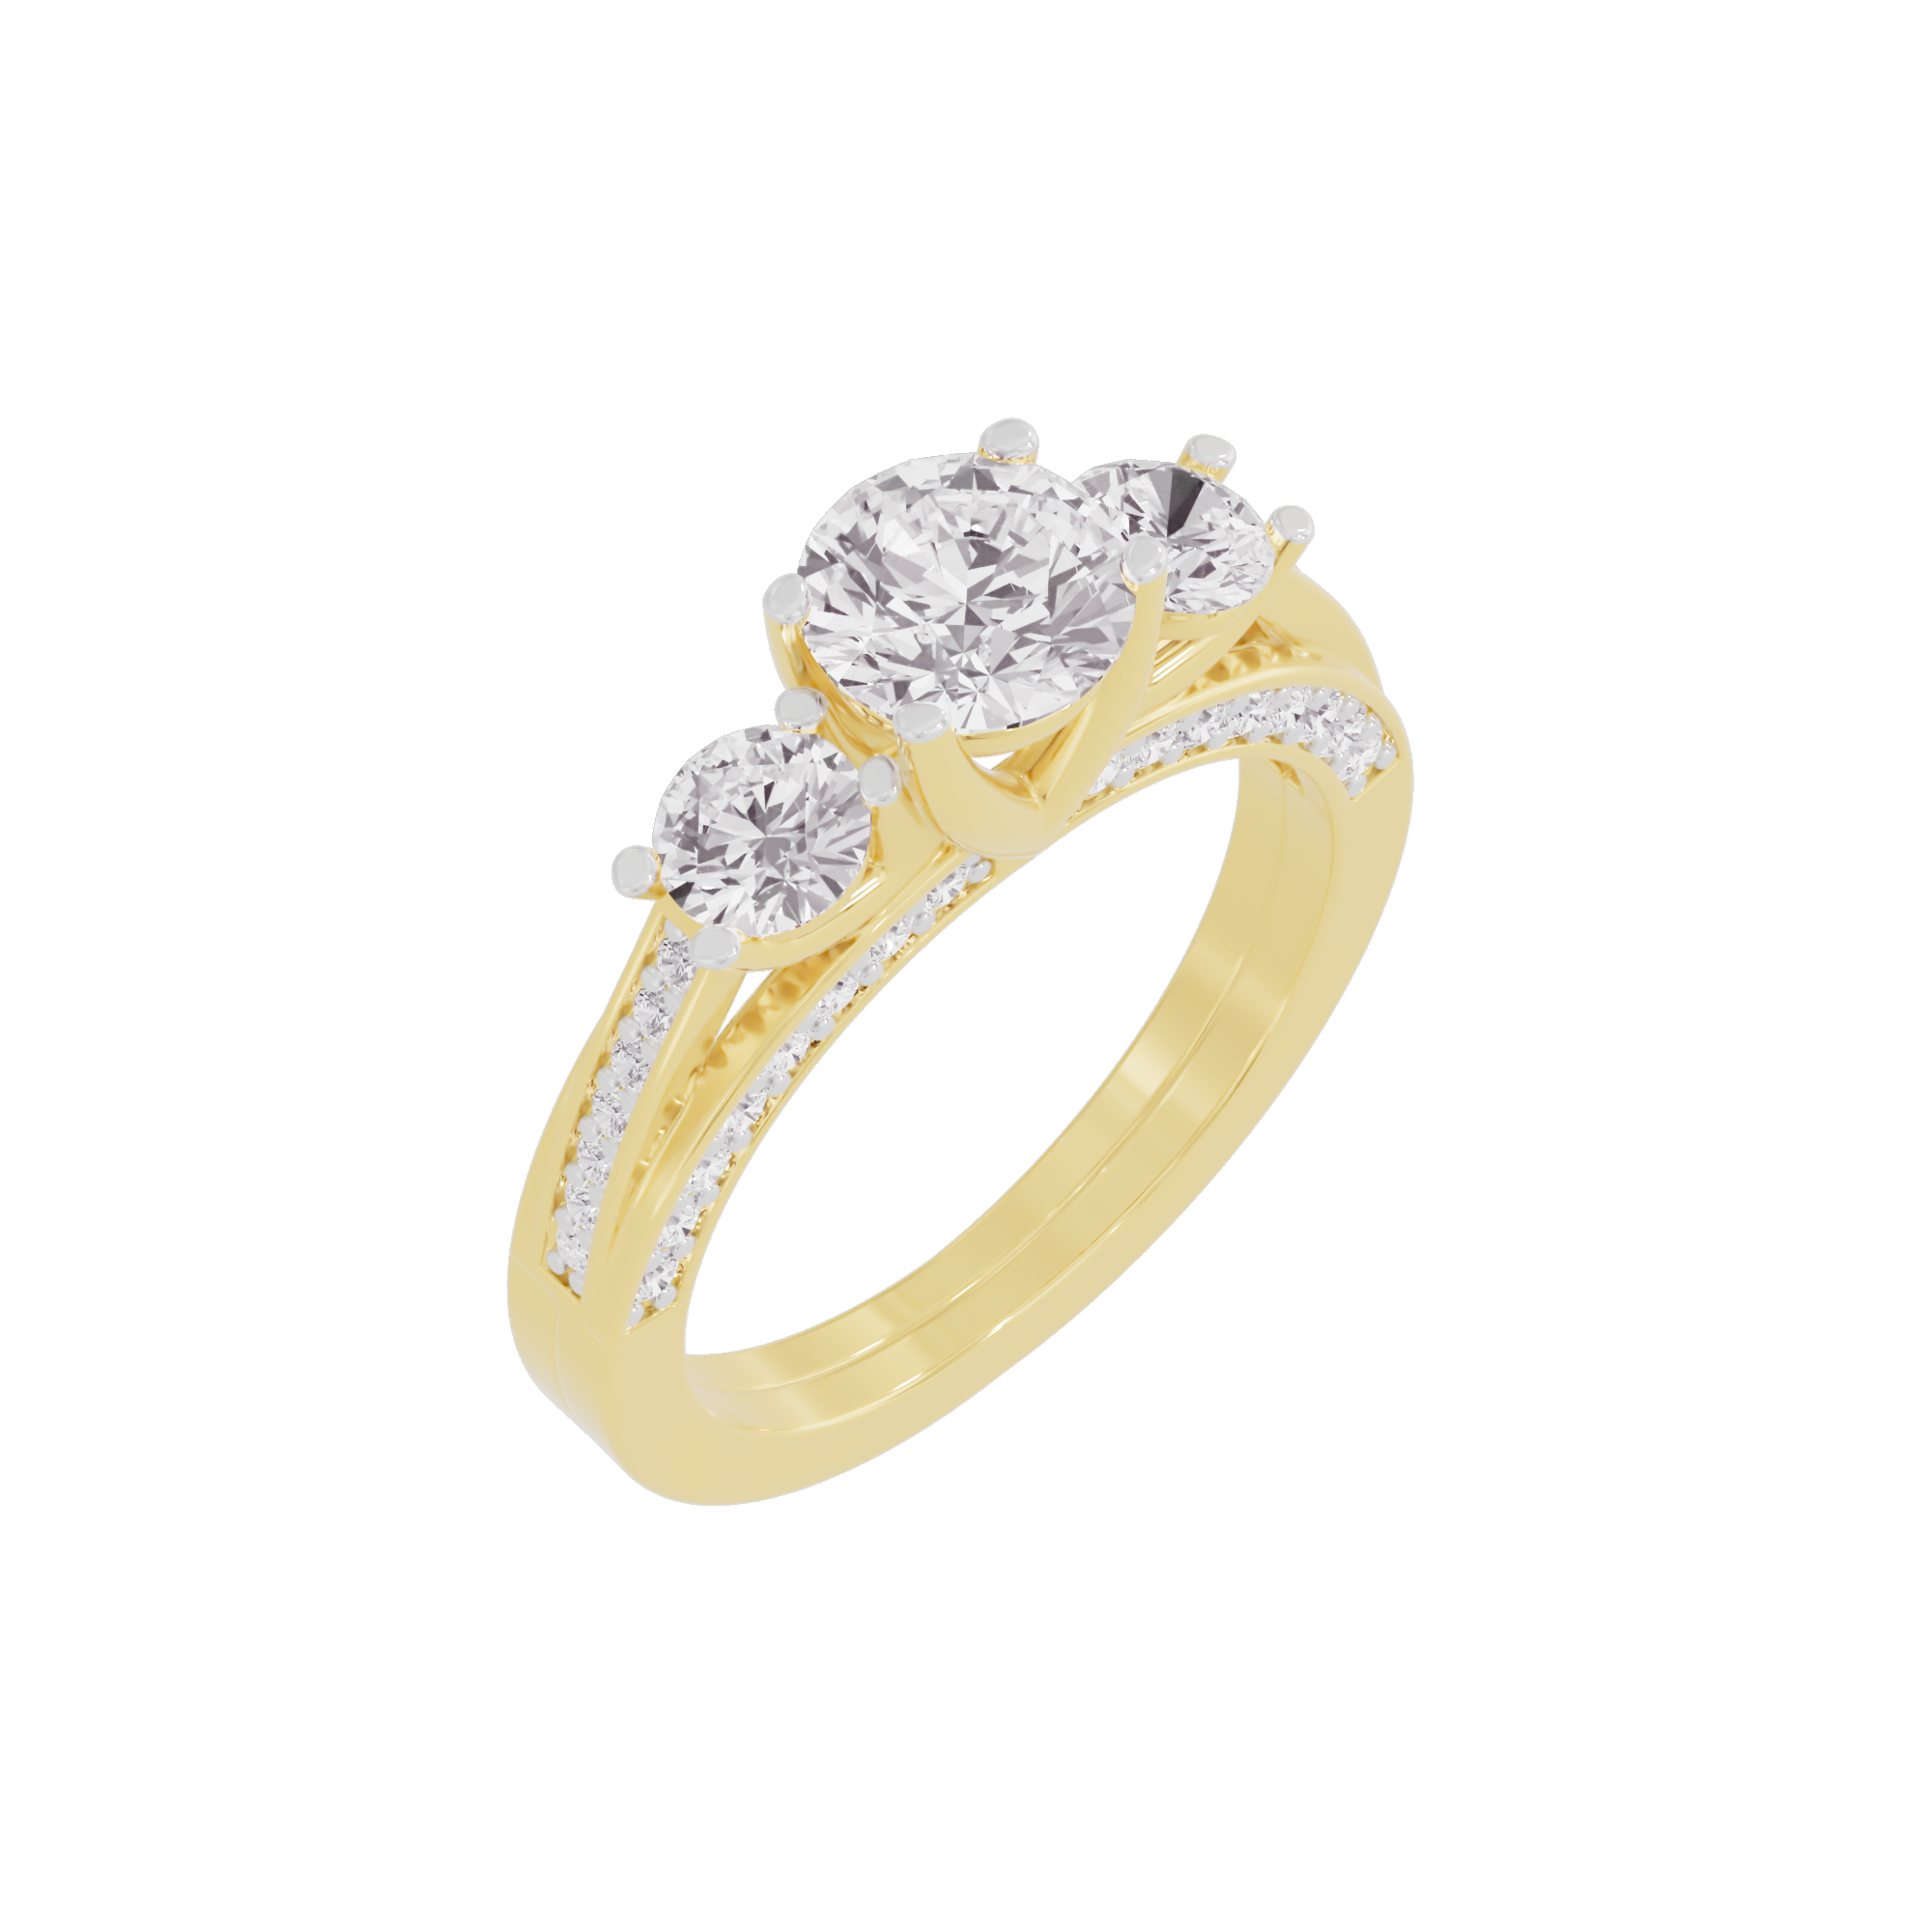 Whispering Romance Diamond Ring